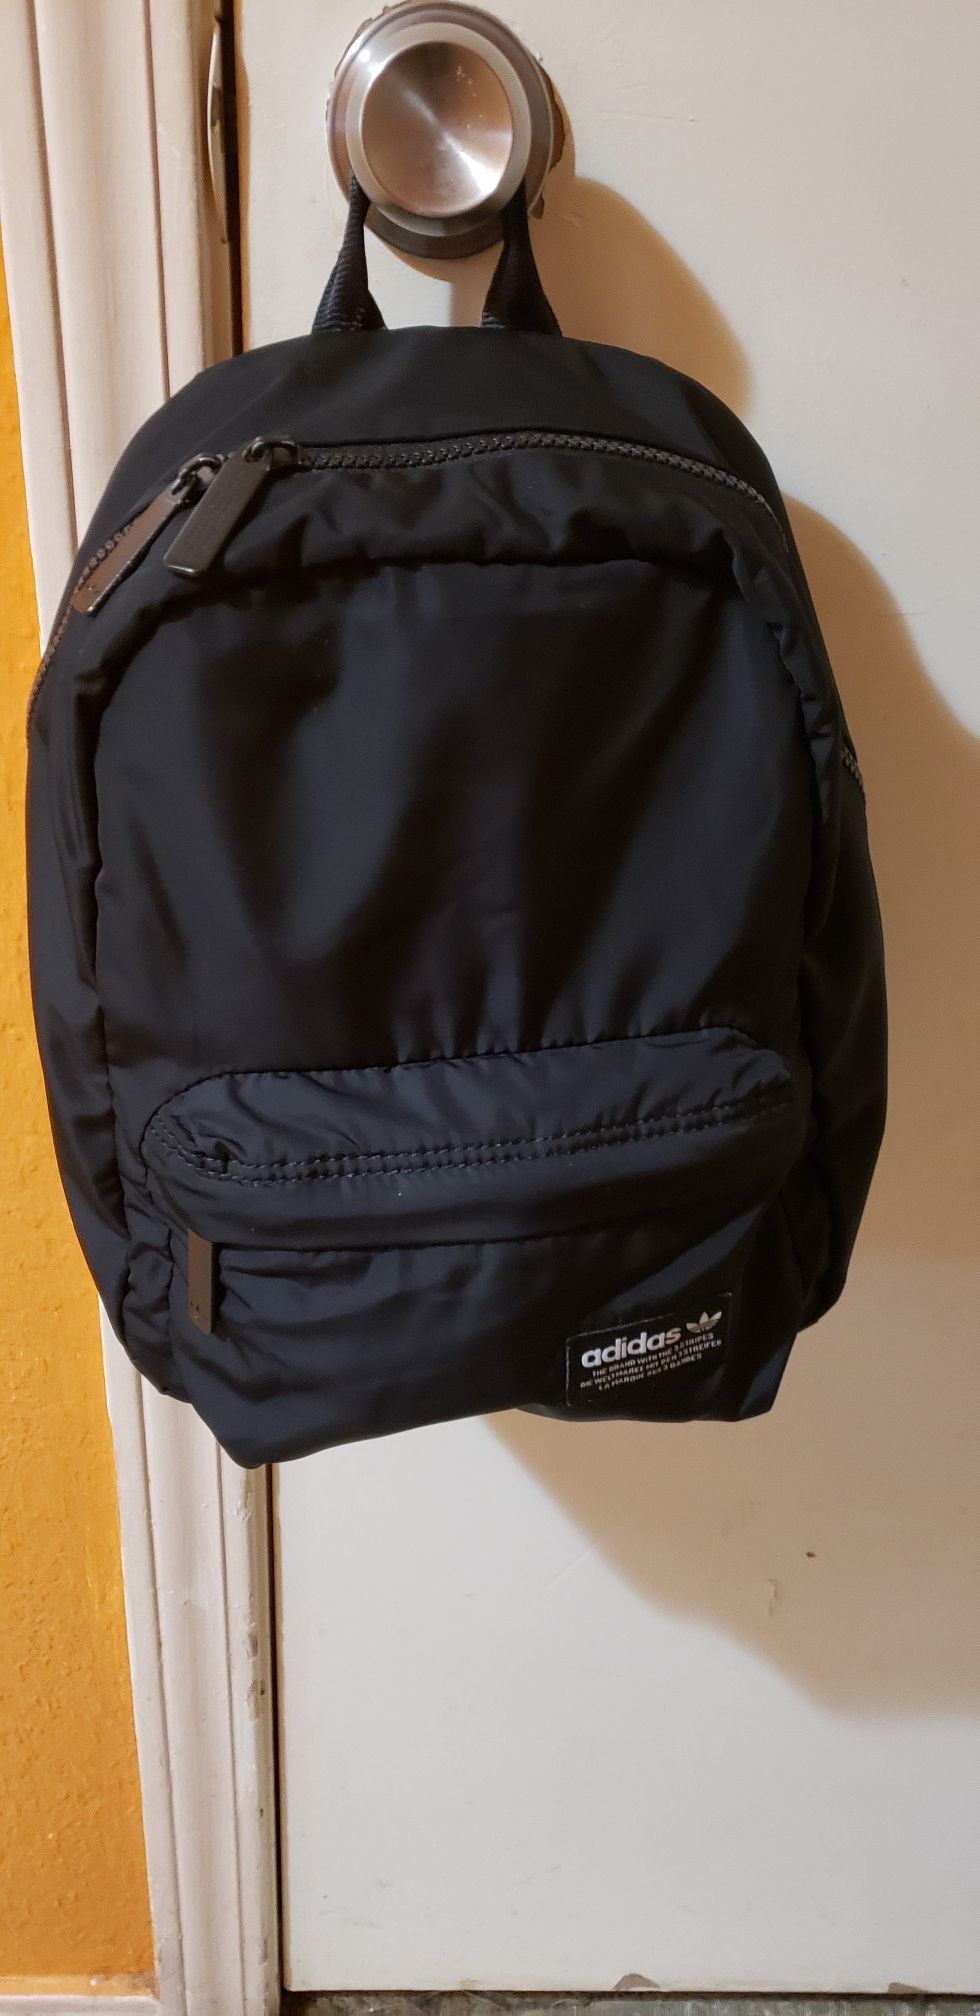 Adidas backpack small